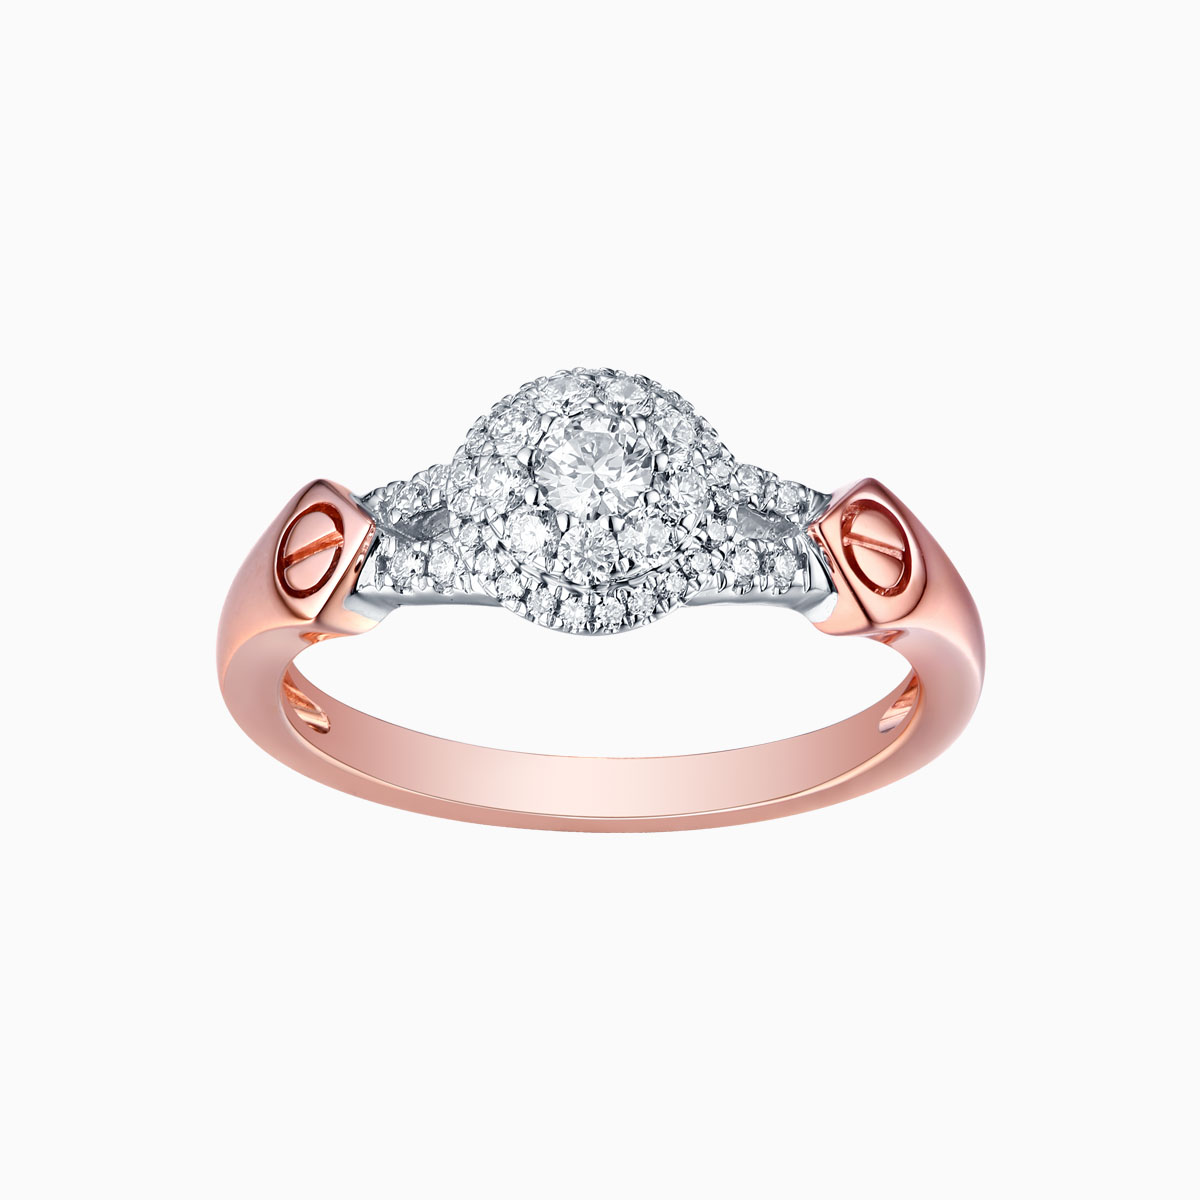 R17592WHT- 14K Rose Gold Diamond Ring, 0.39 TCW